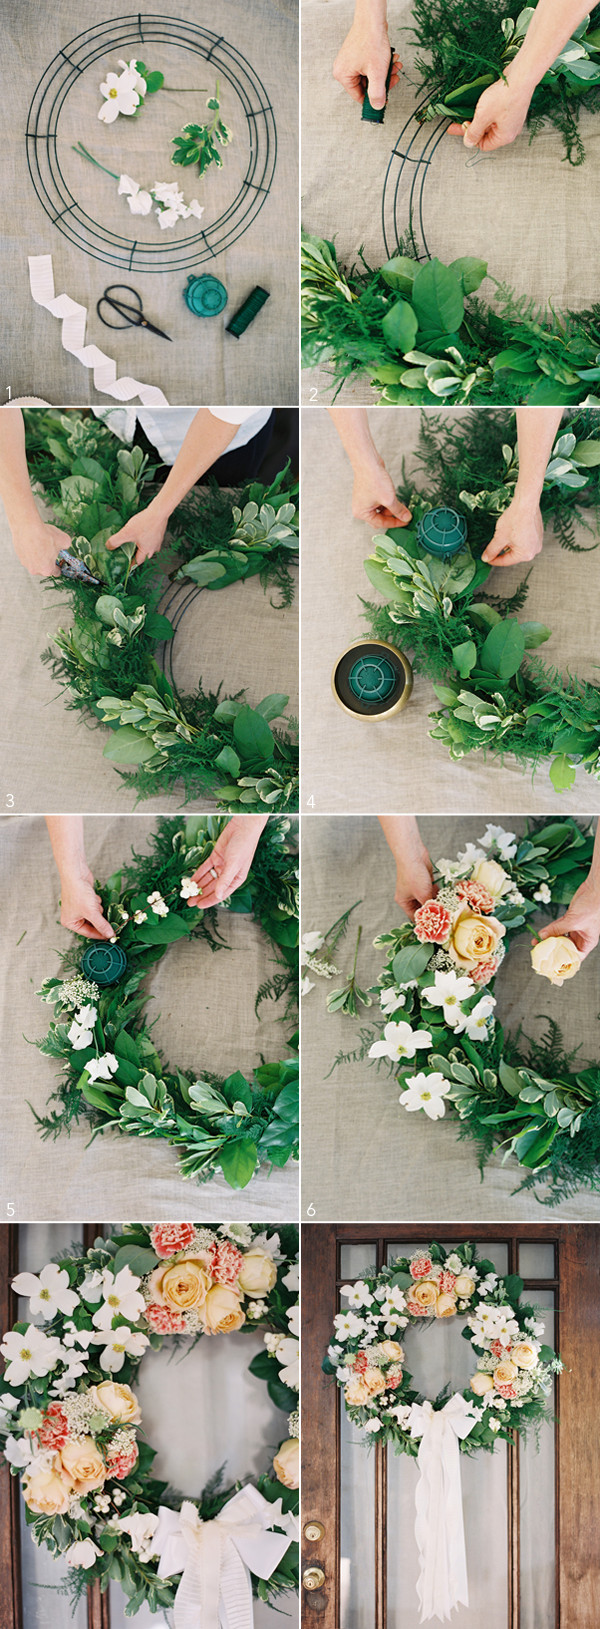 Best ideas about DIY Wedding Decor Ideas
. Save or Pin DIY Wedding Wreath ce Wed Now.